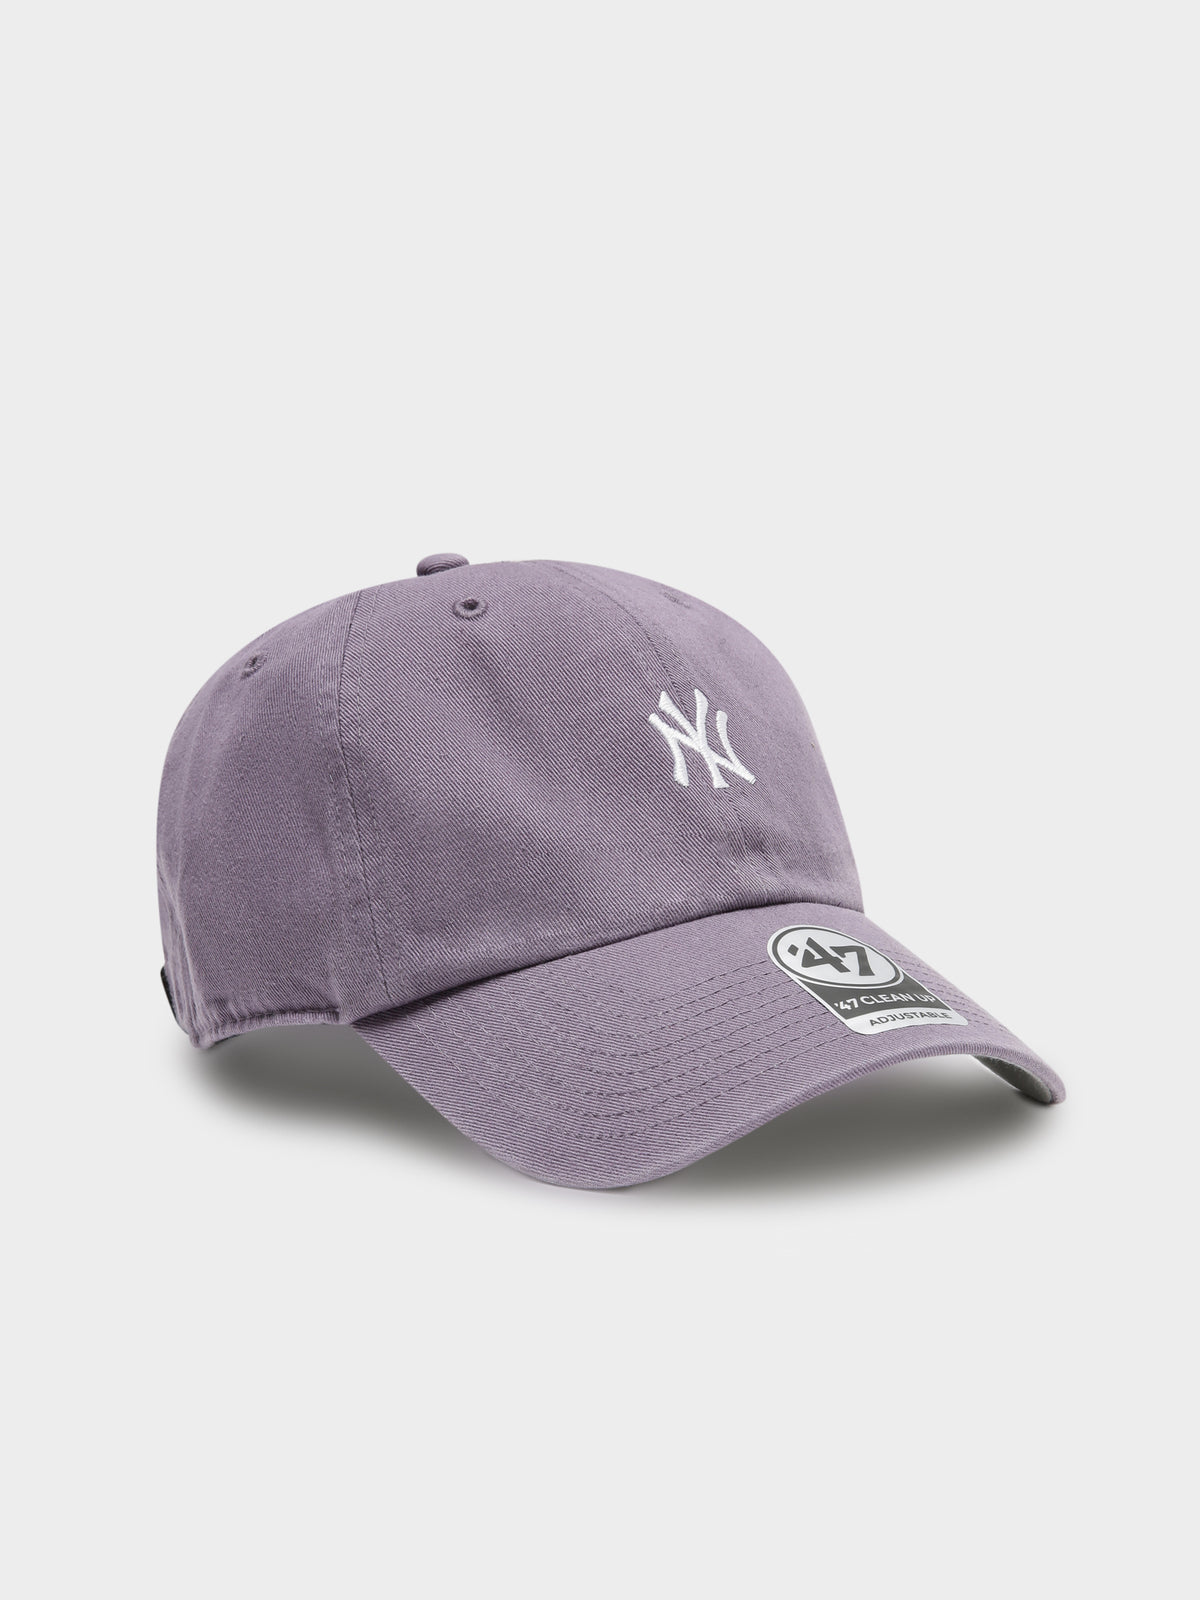 NY Yankees Baseball Cap in Purple